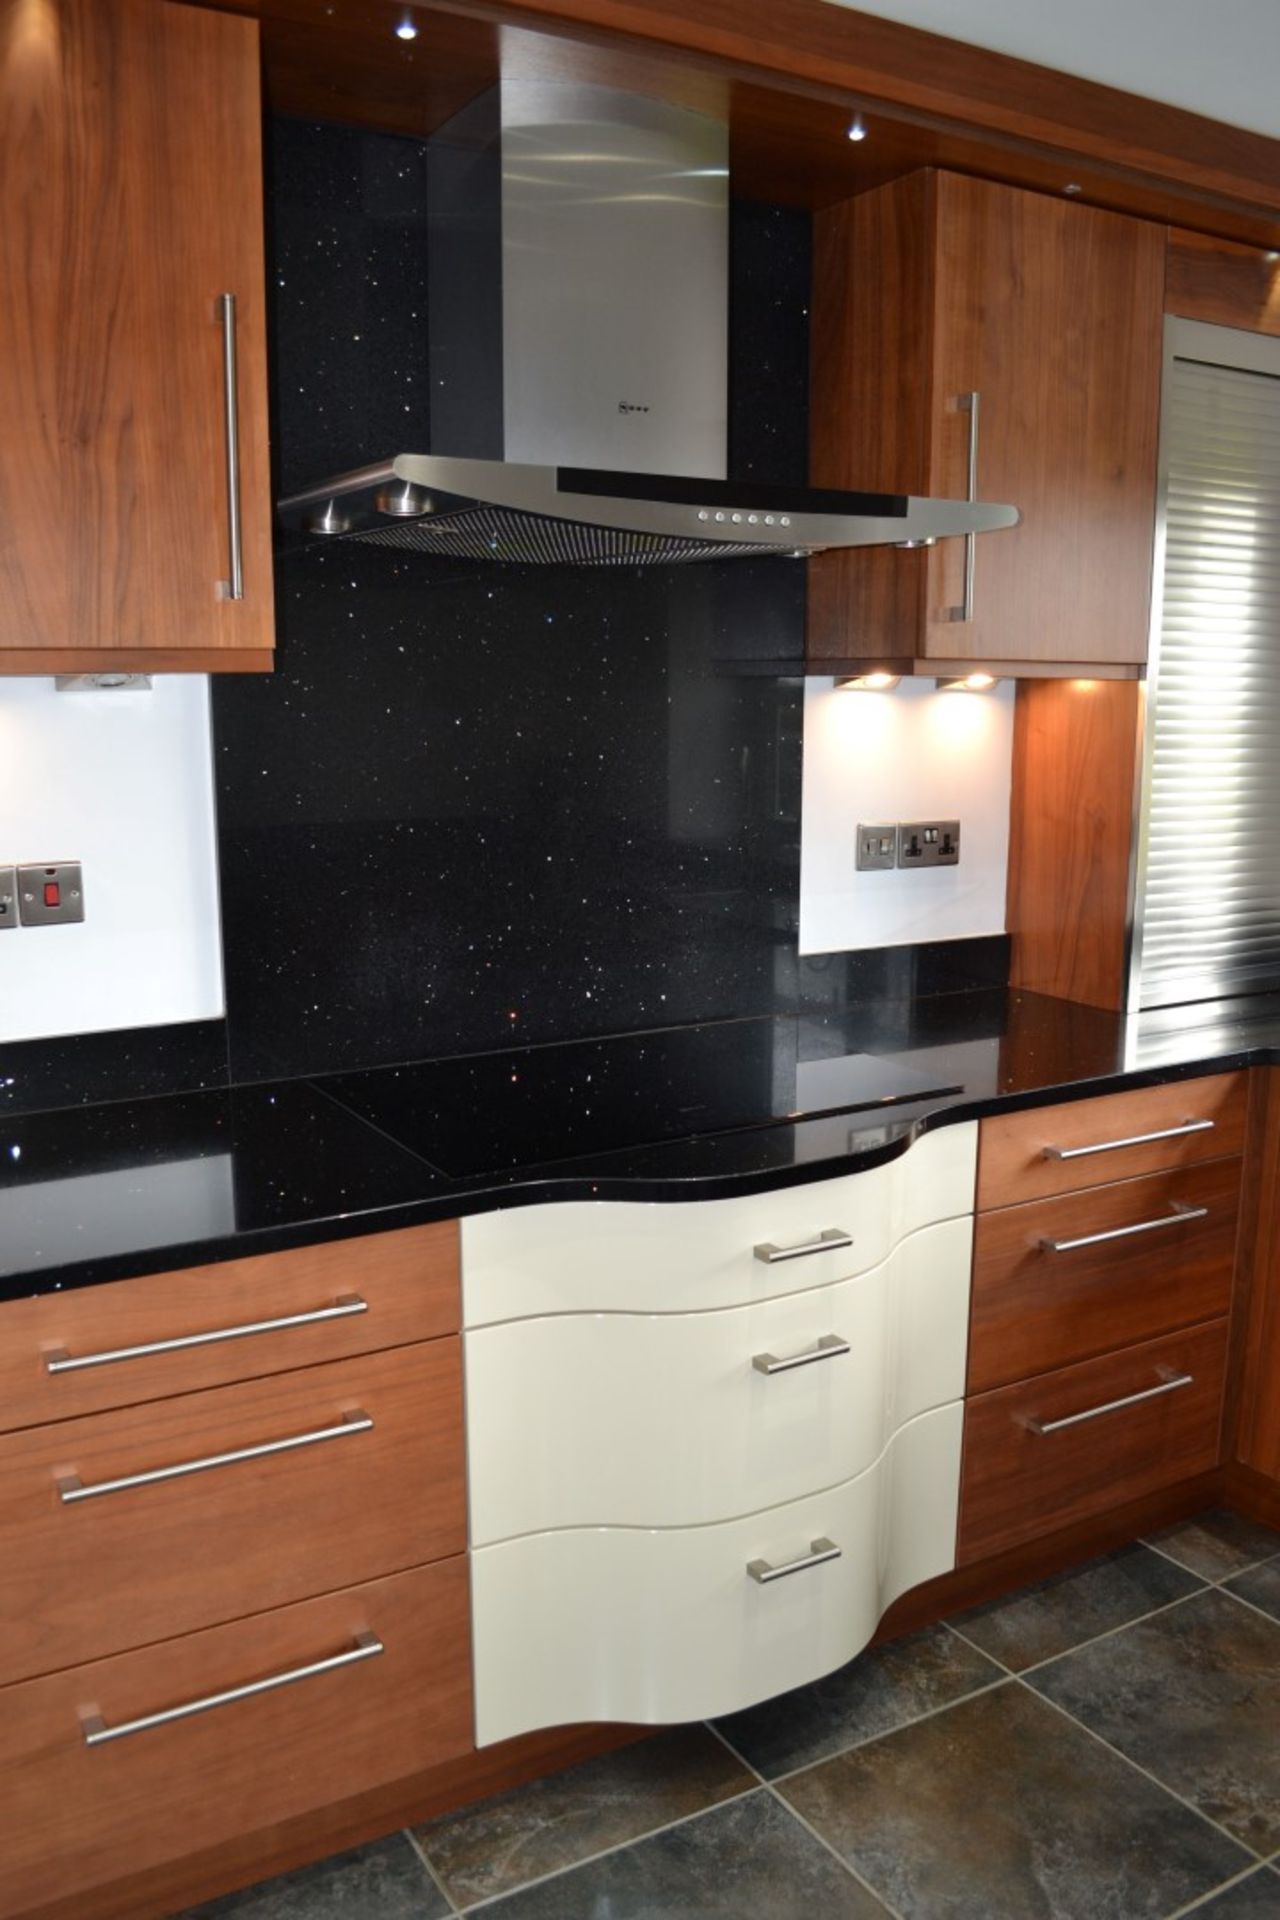 1 x Kitchen Design Bespoke Fitted Kitchen With Silestone Worktops & Neff Appliances - Superb - Image 34 of 59